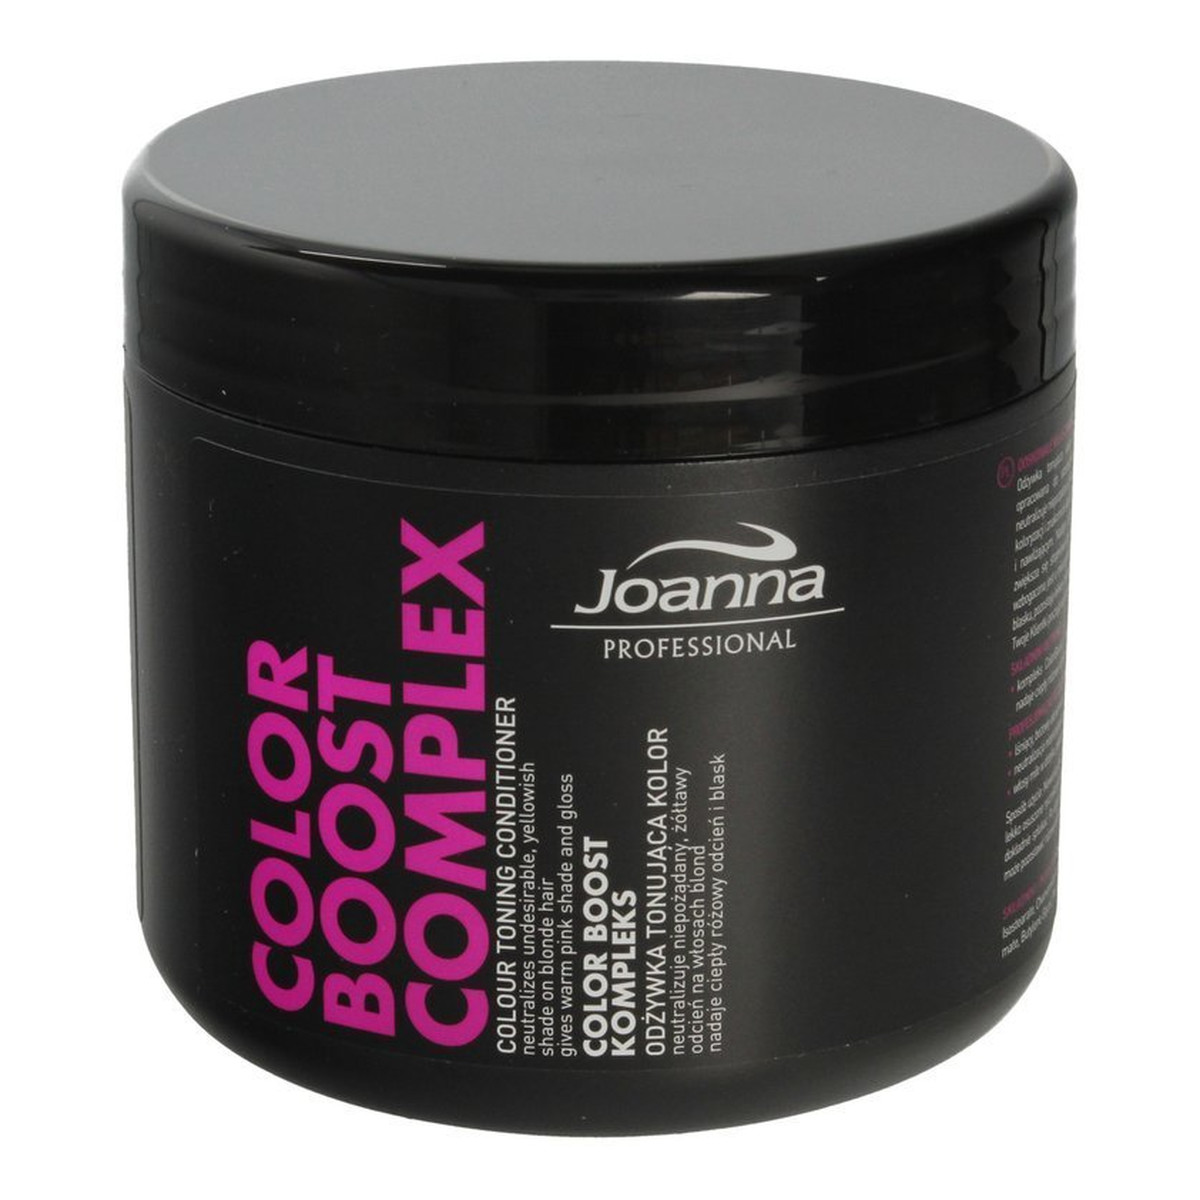 Joanna Color Boost Colour Toning odżywka tonująca kolor 500g